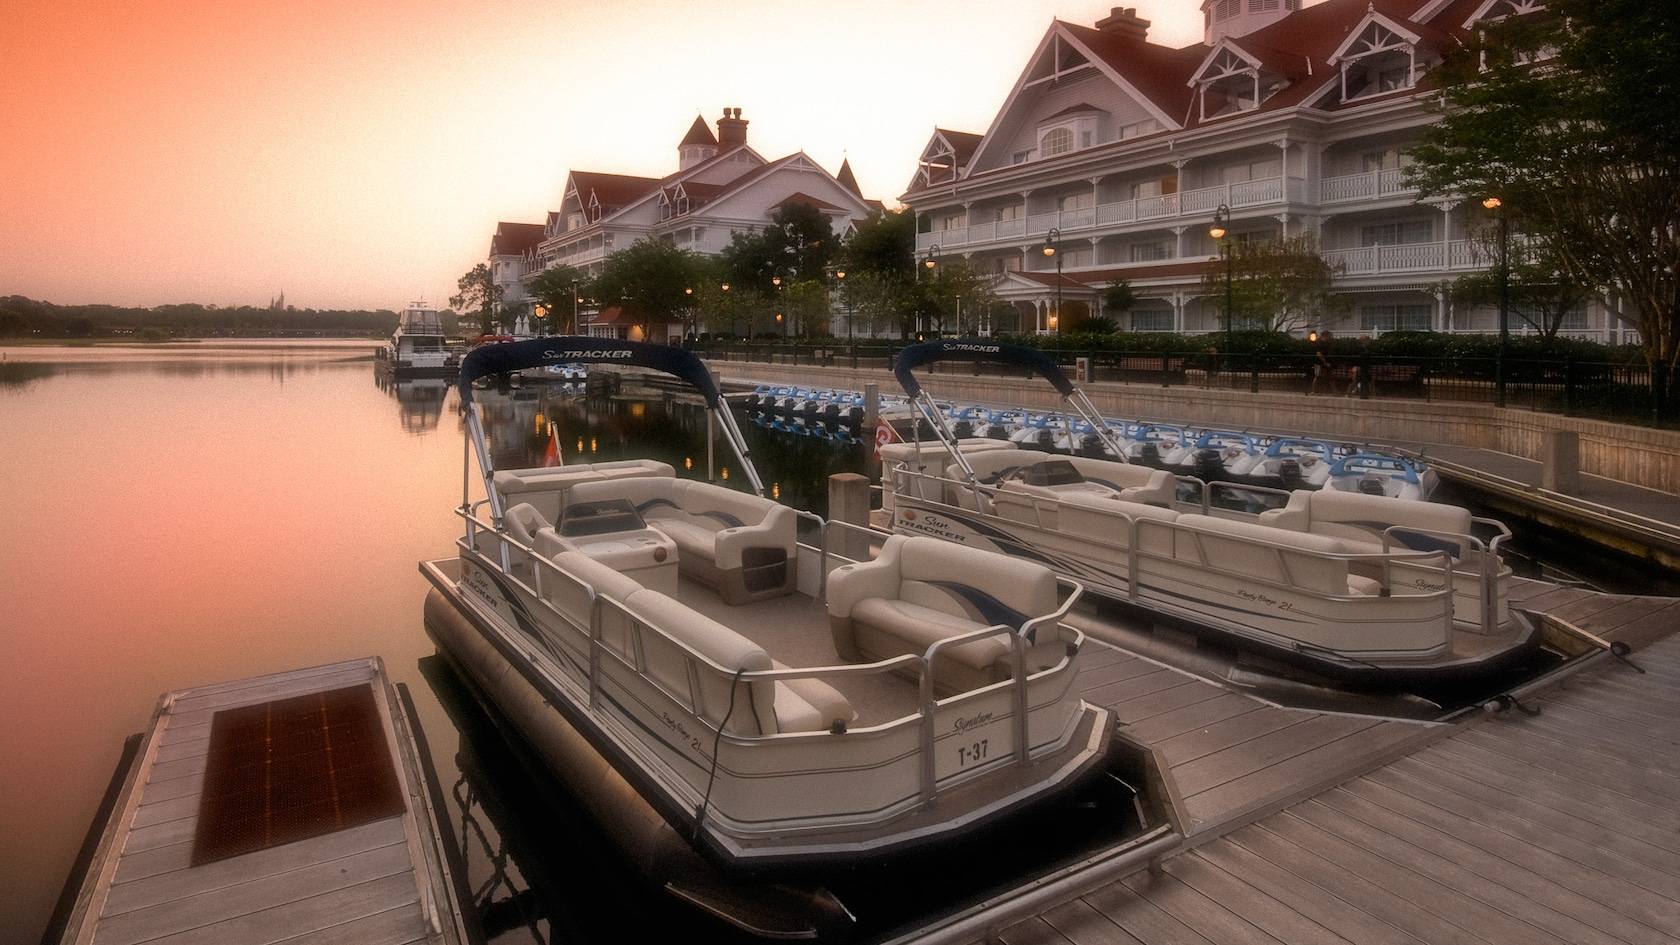 Pontoon Boat at Disney's Grand Floridian Resort